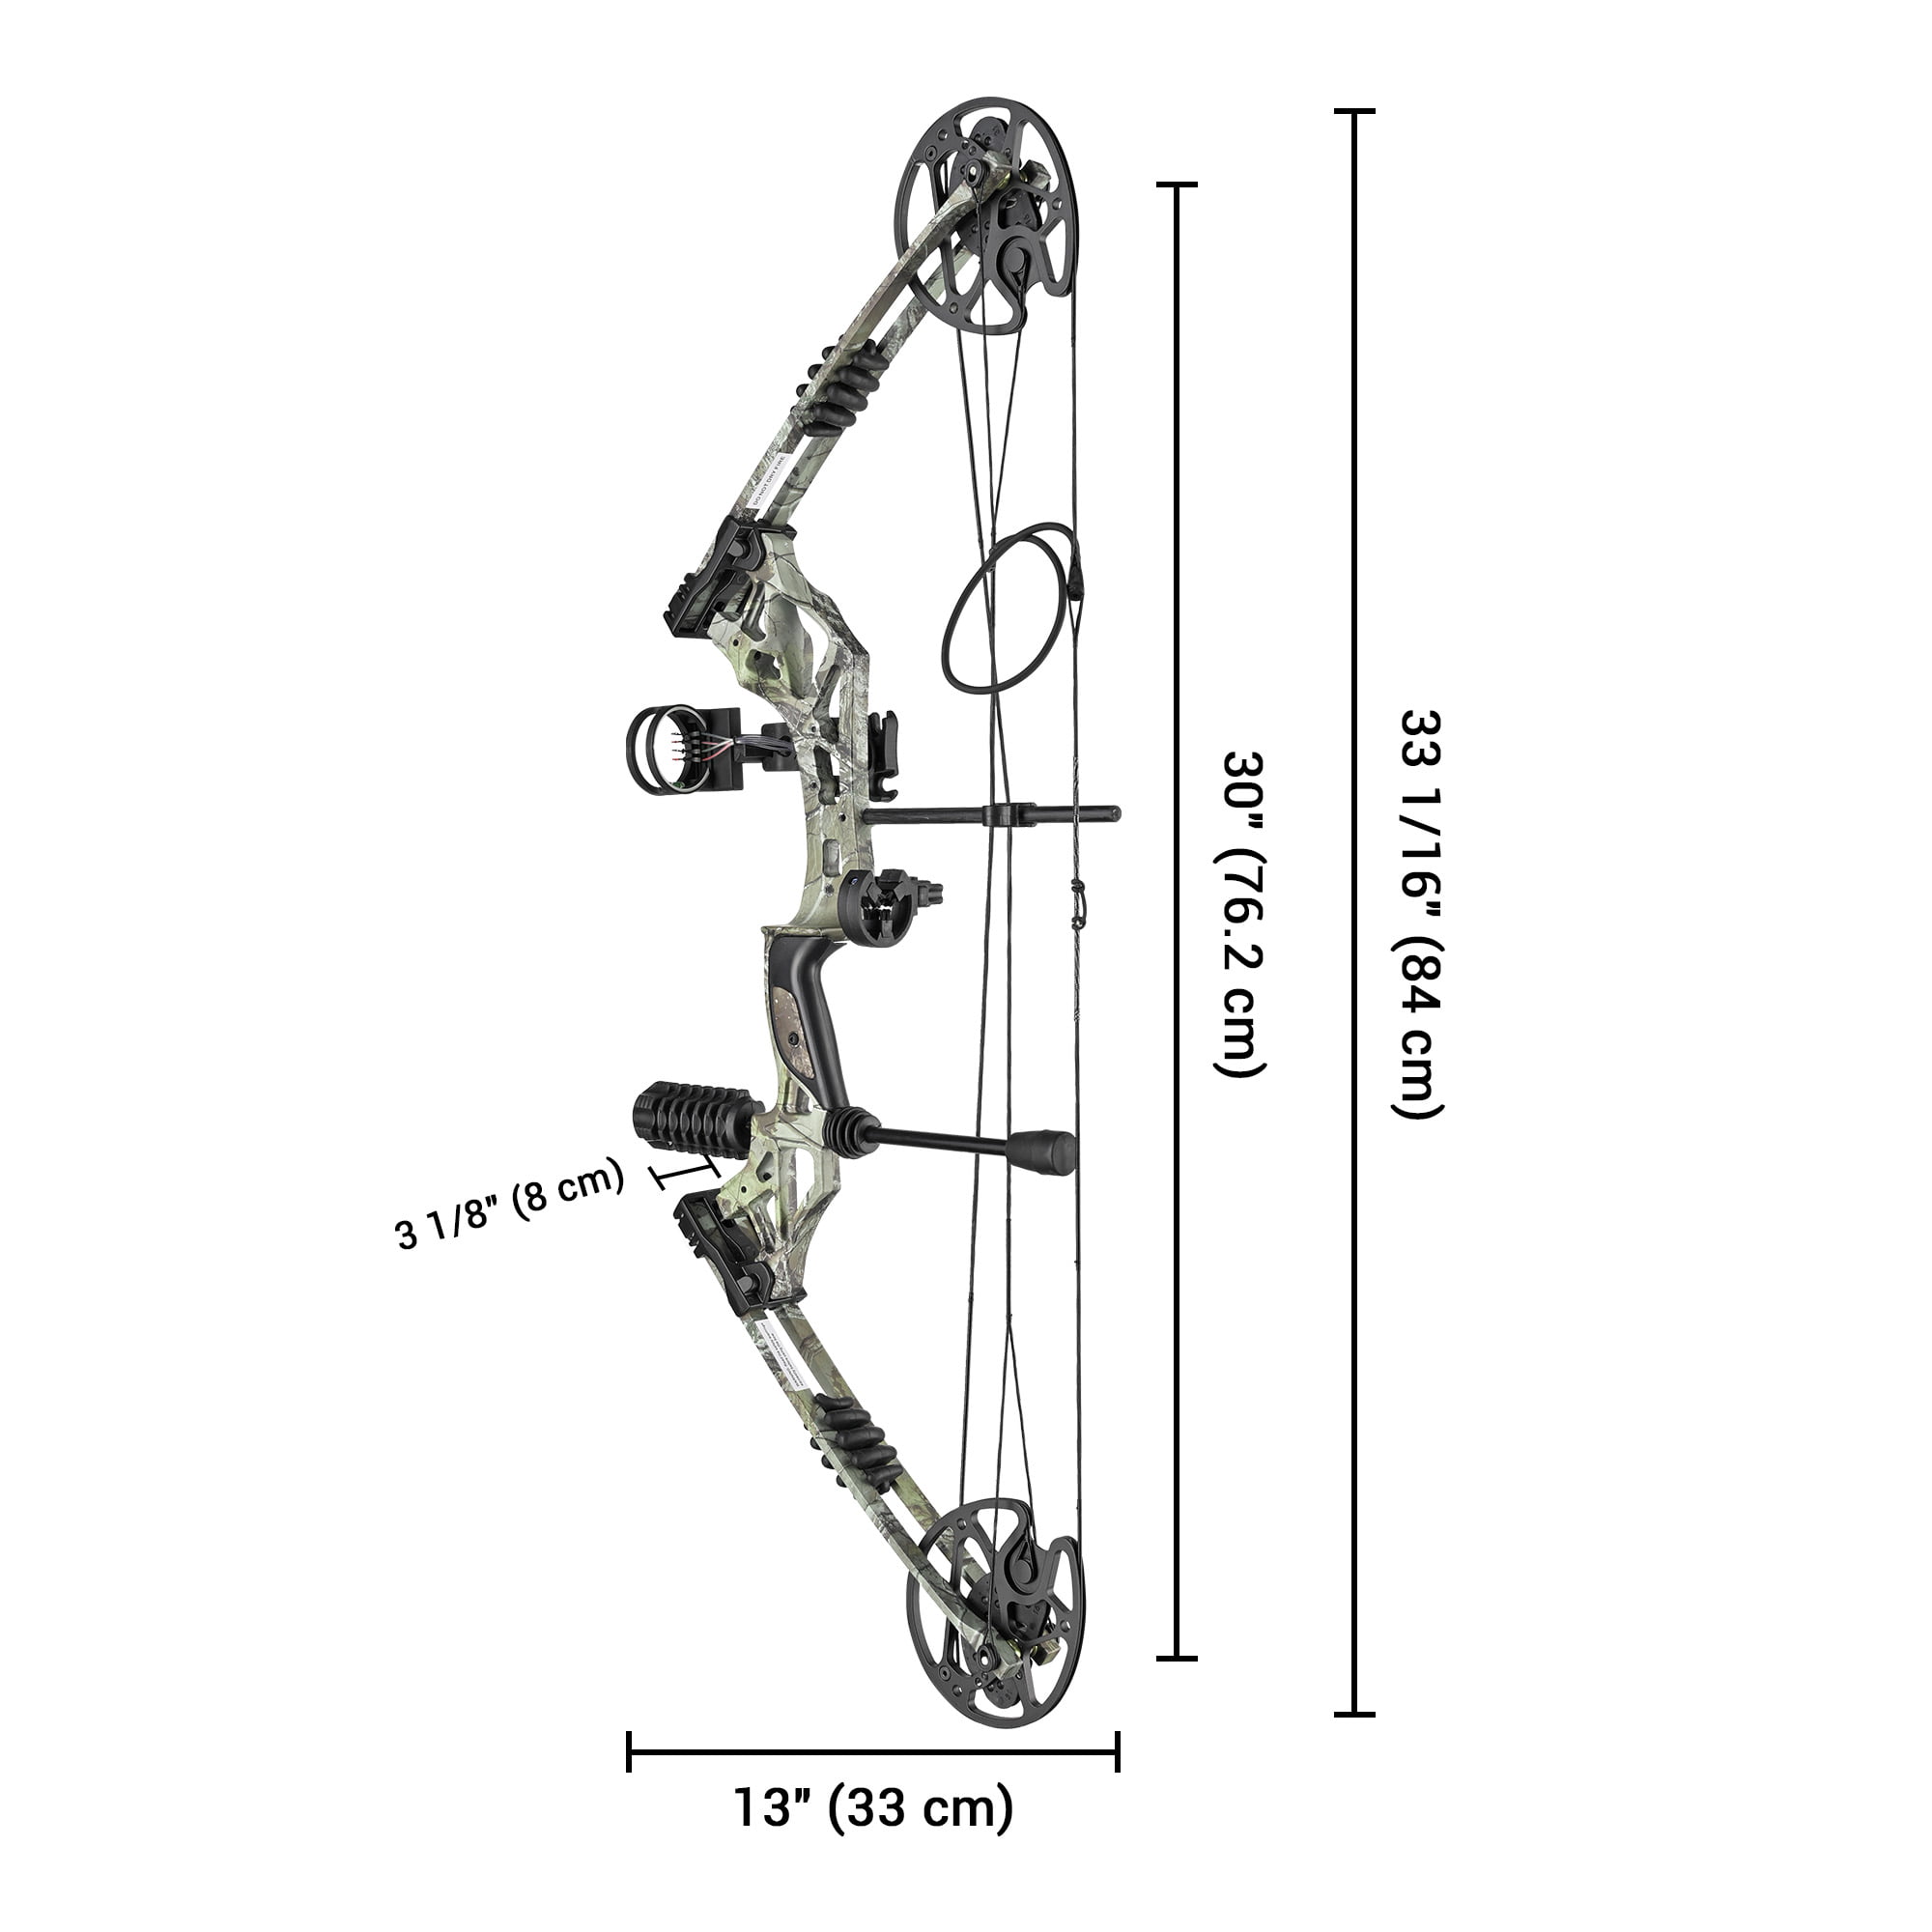 Jacoble Archery Compound Bow Kit w/ 12 Arrows Right Hand Camo 